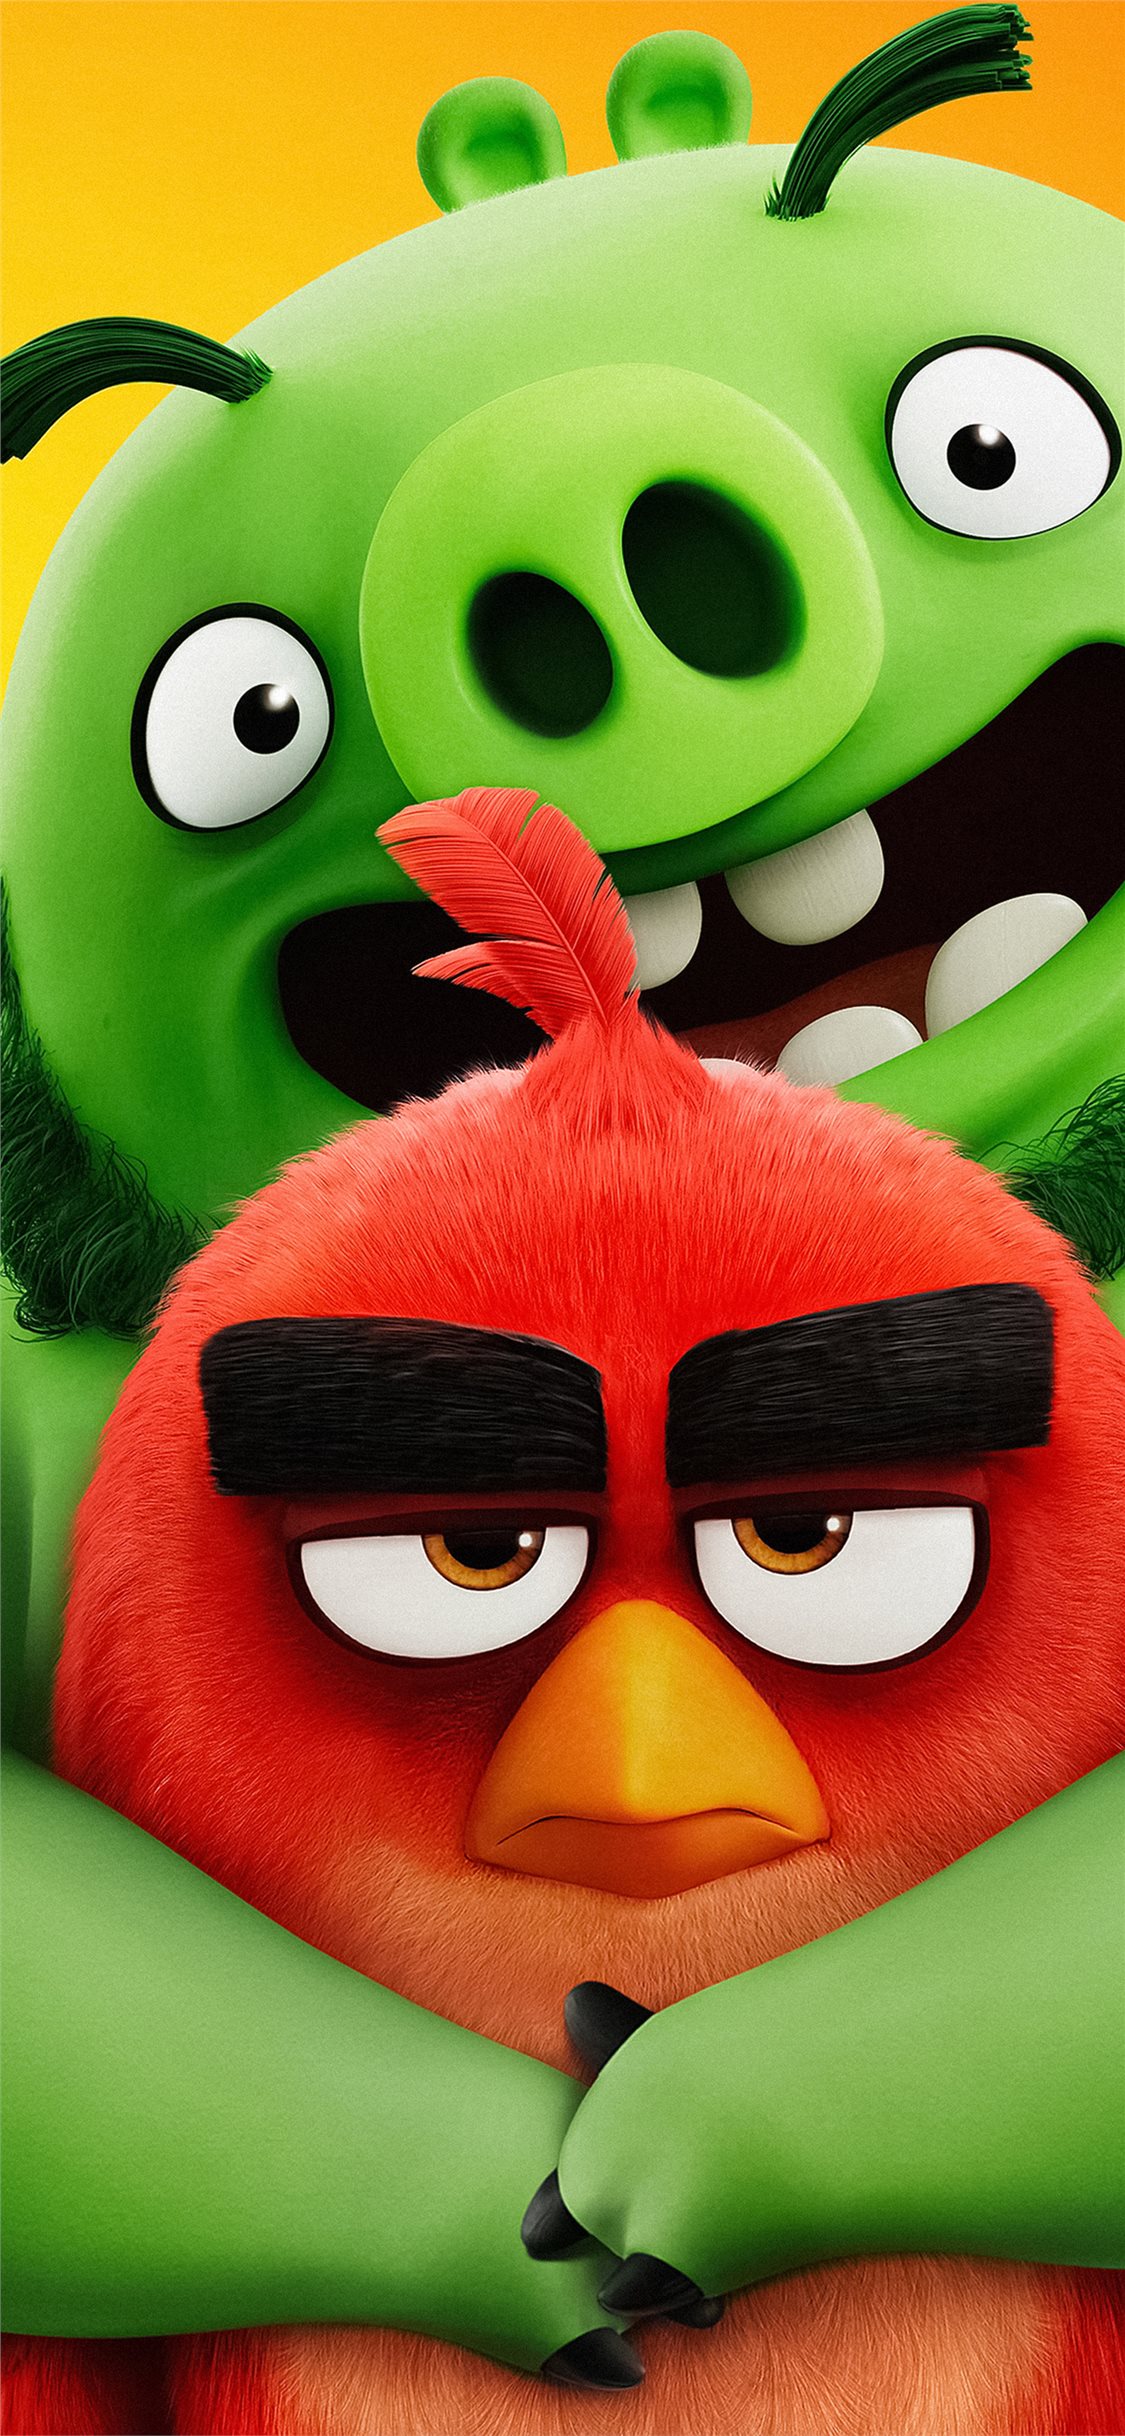 Angry Birds Movie Wallpaper 4k Ultra HD ID4101